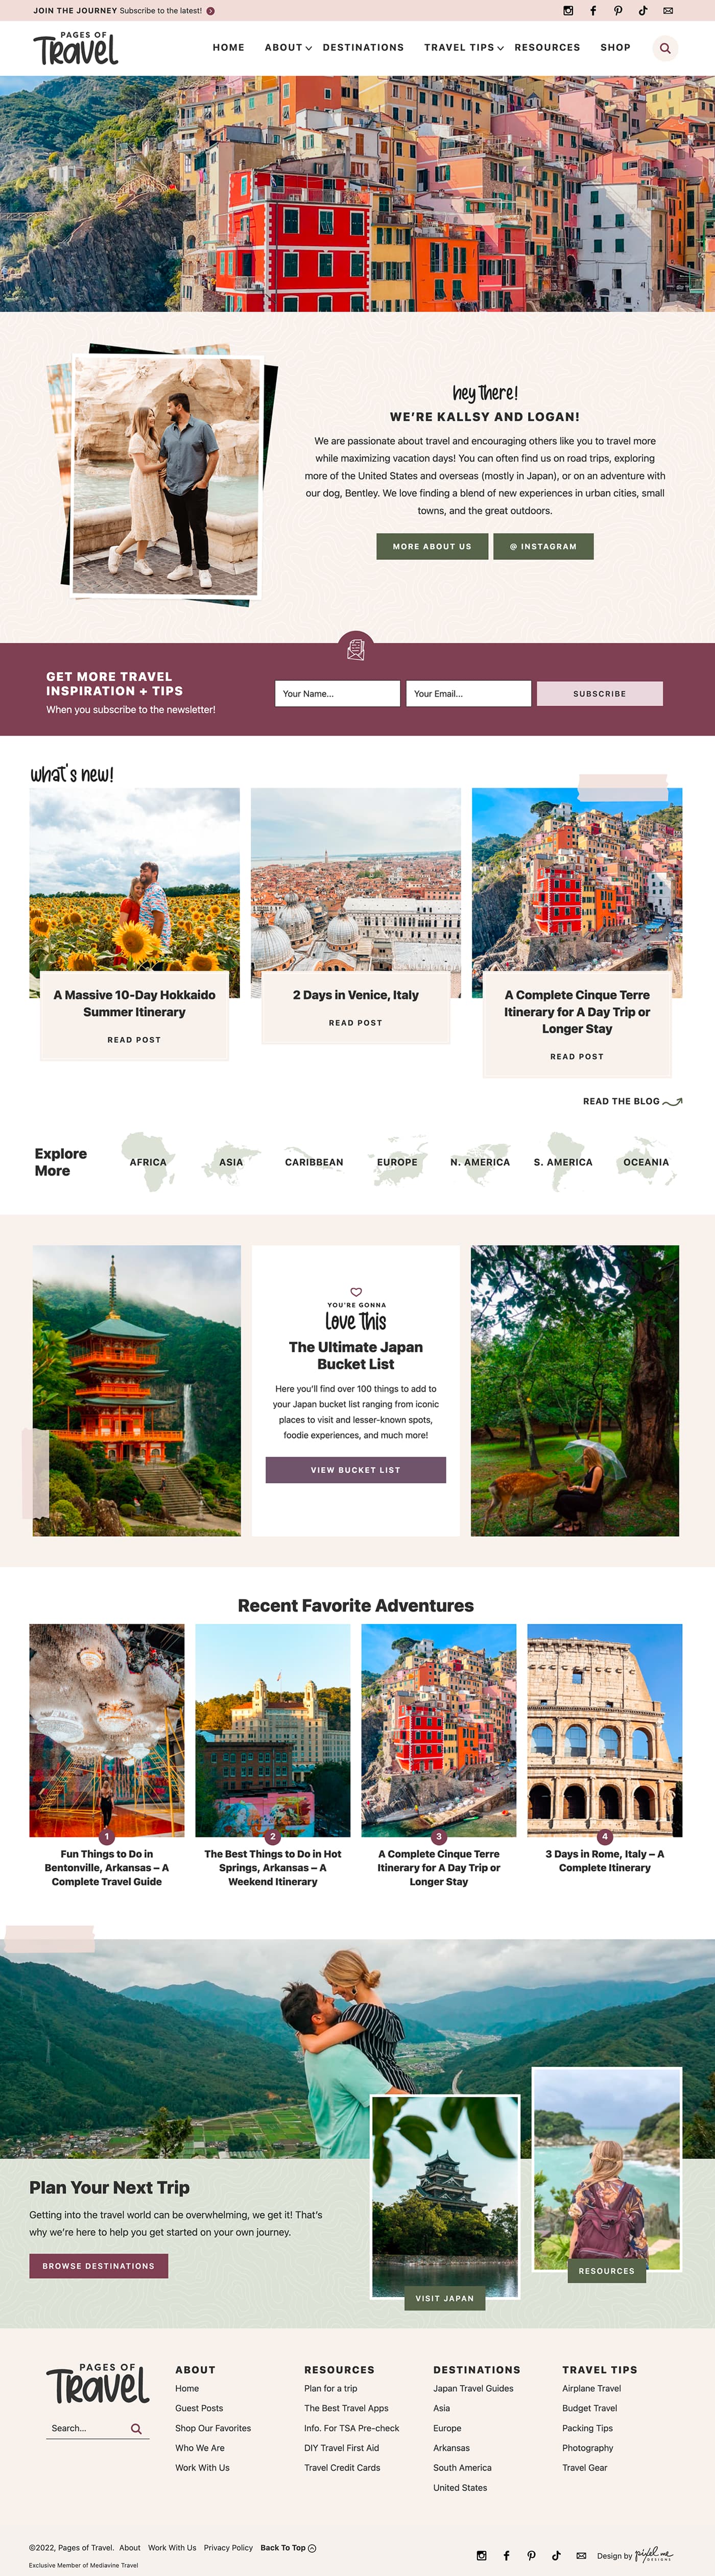 Pages Of Travel Mockup Design.